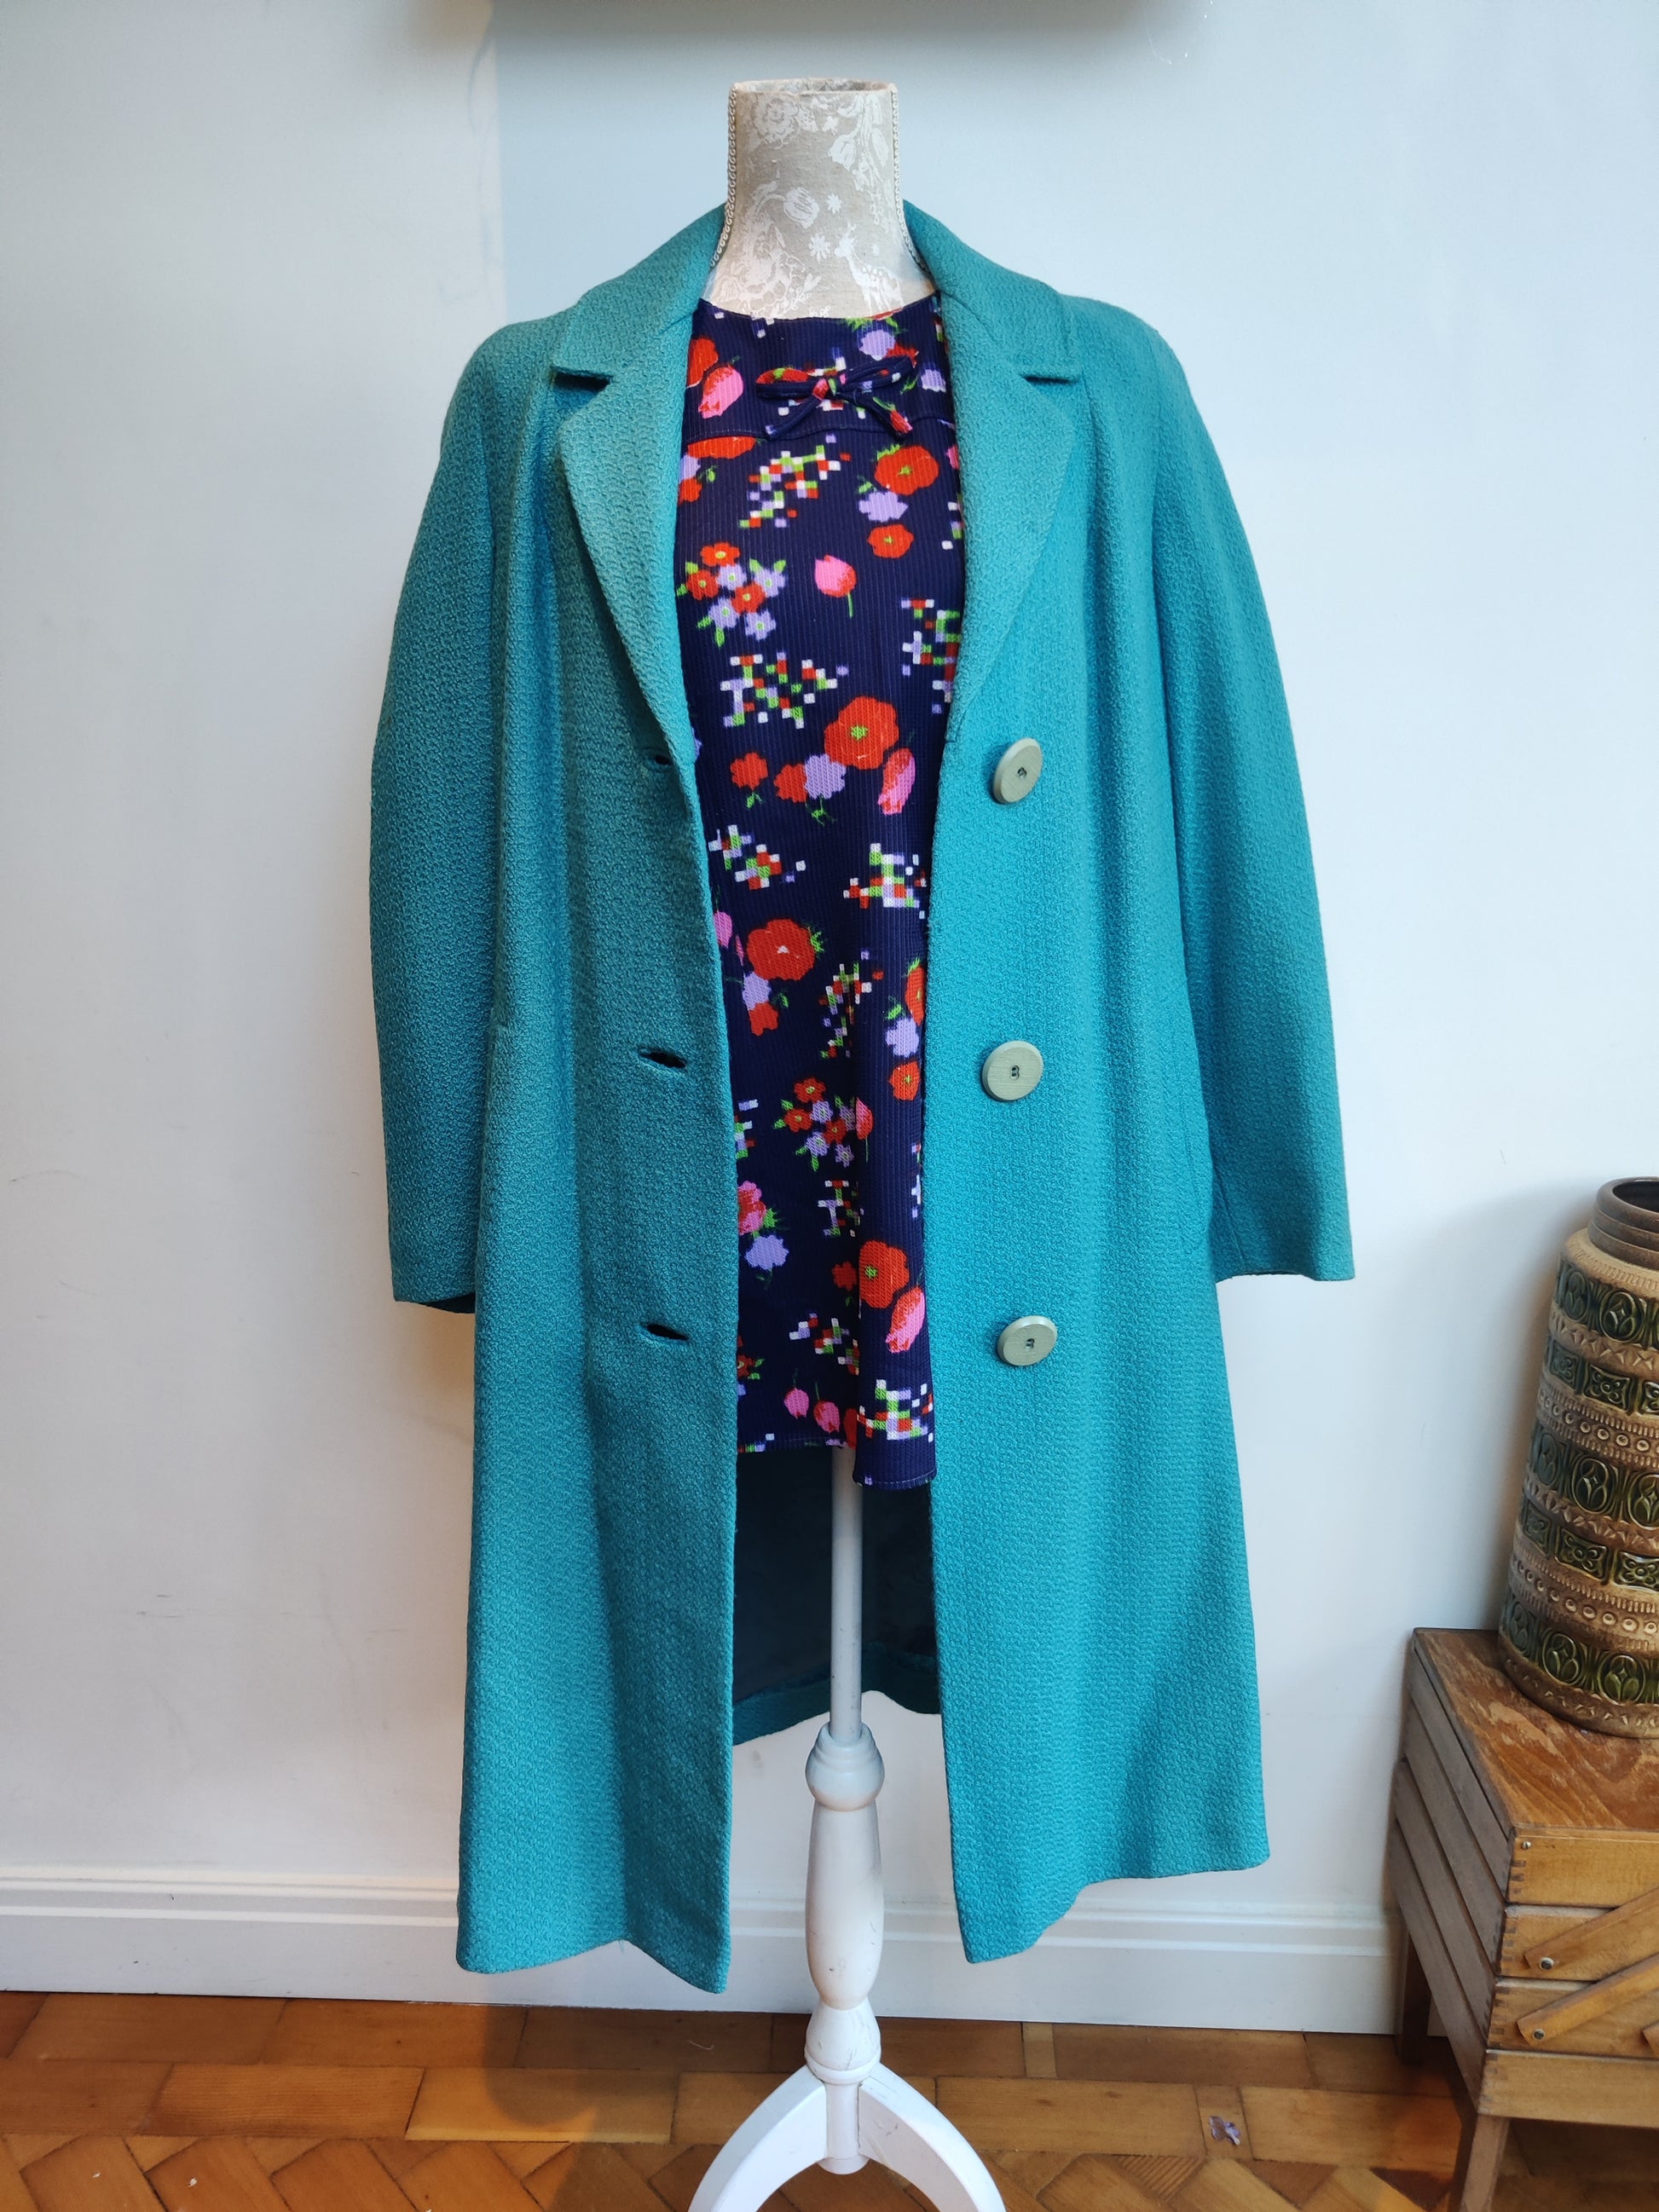 Lovely single breasted blue vintage coat.